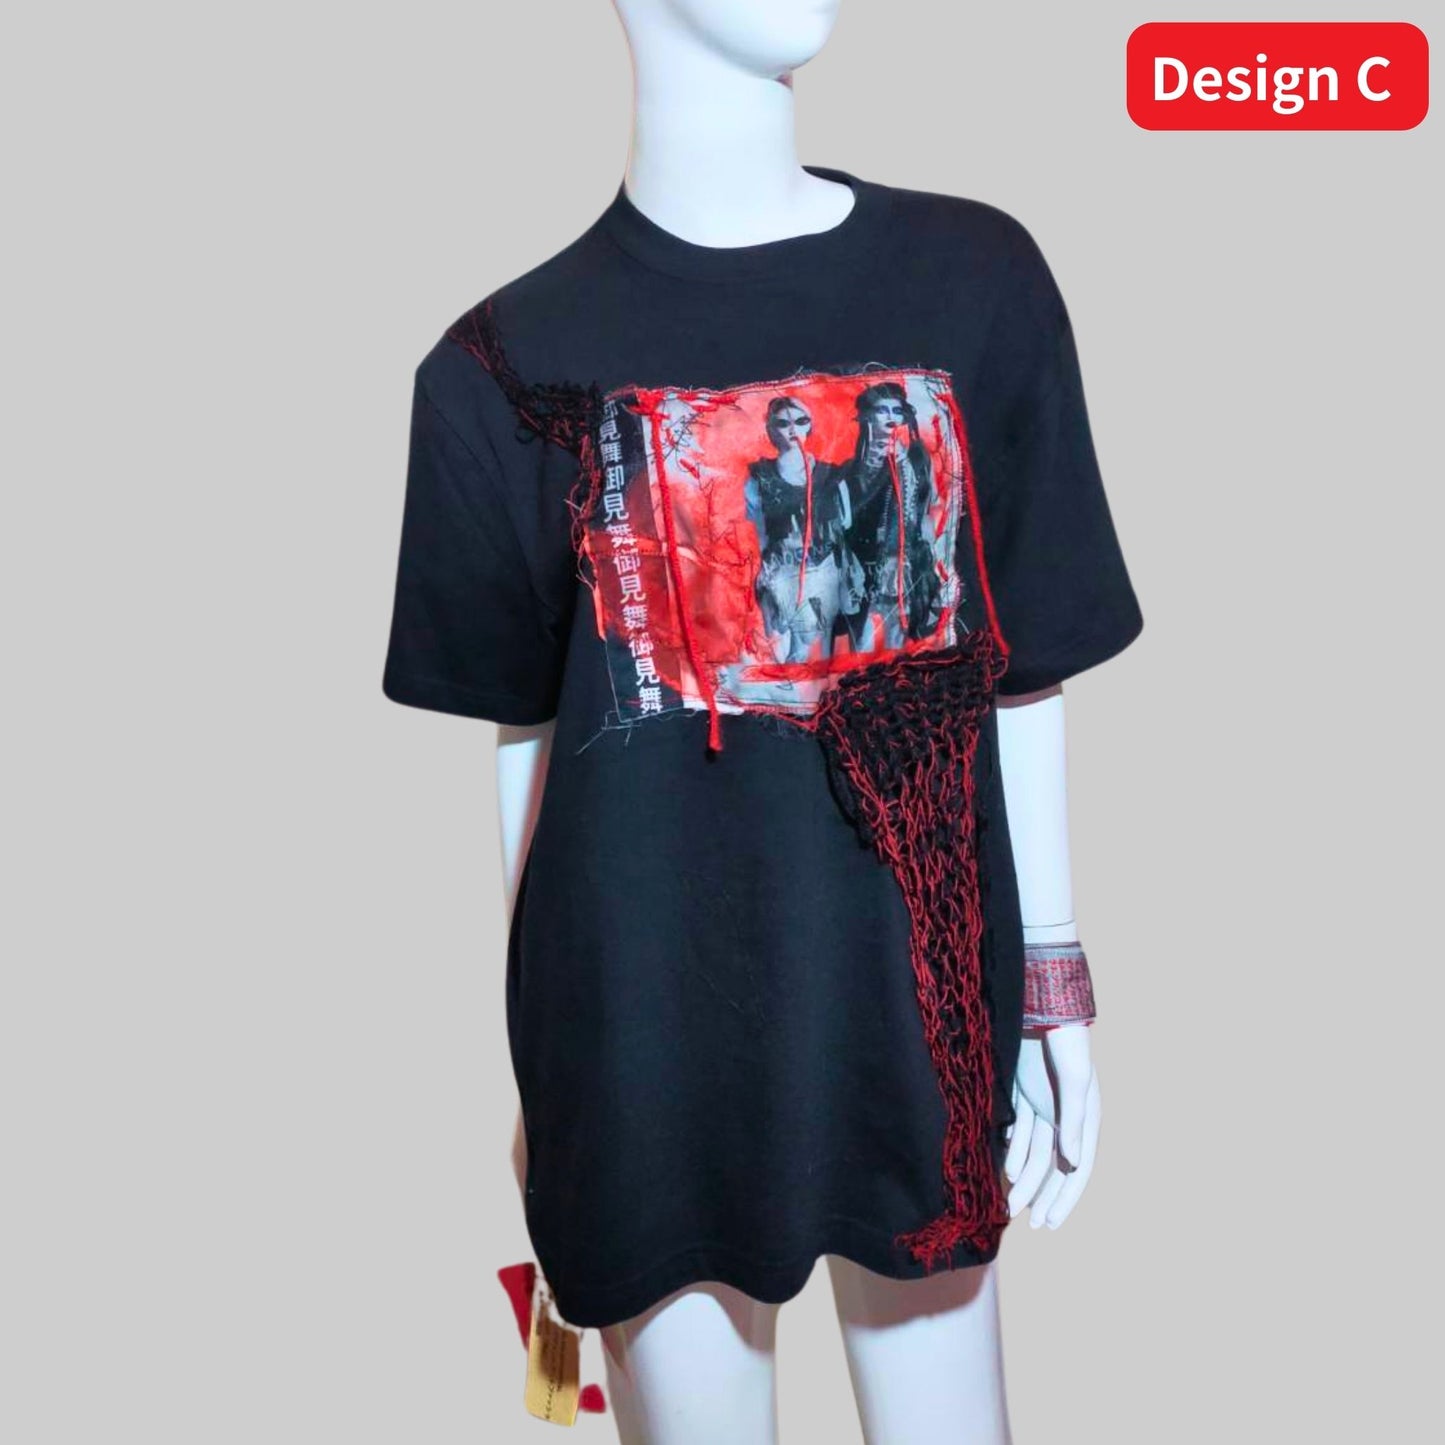 Die „bedruckte“ T-Shirt-Knit-Patch-Design-Kollektion